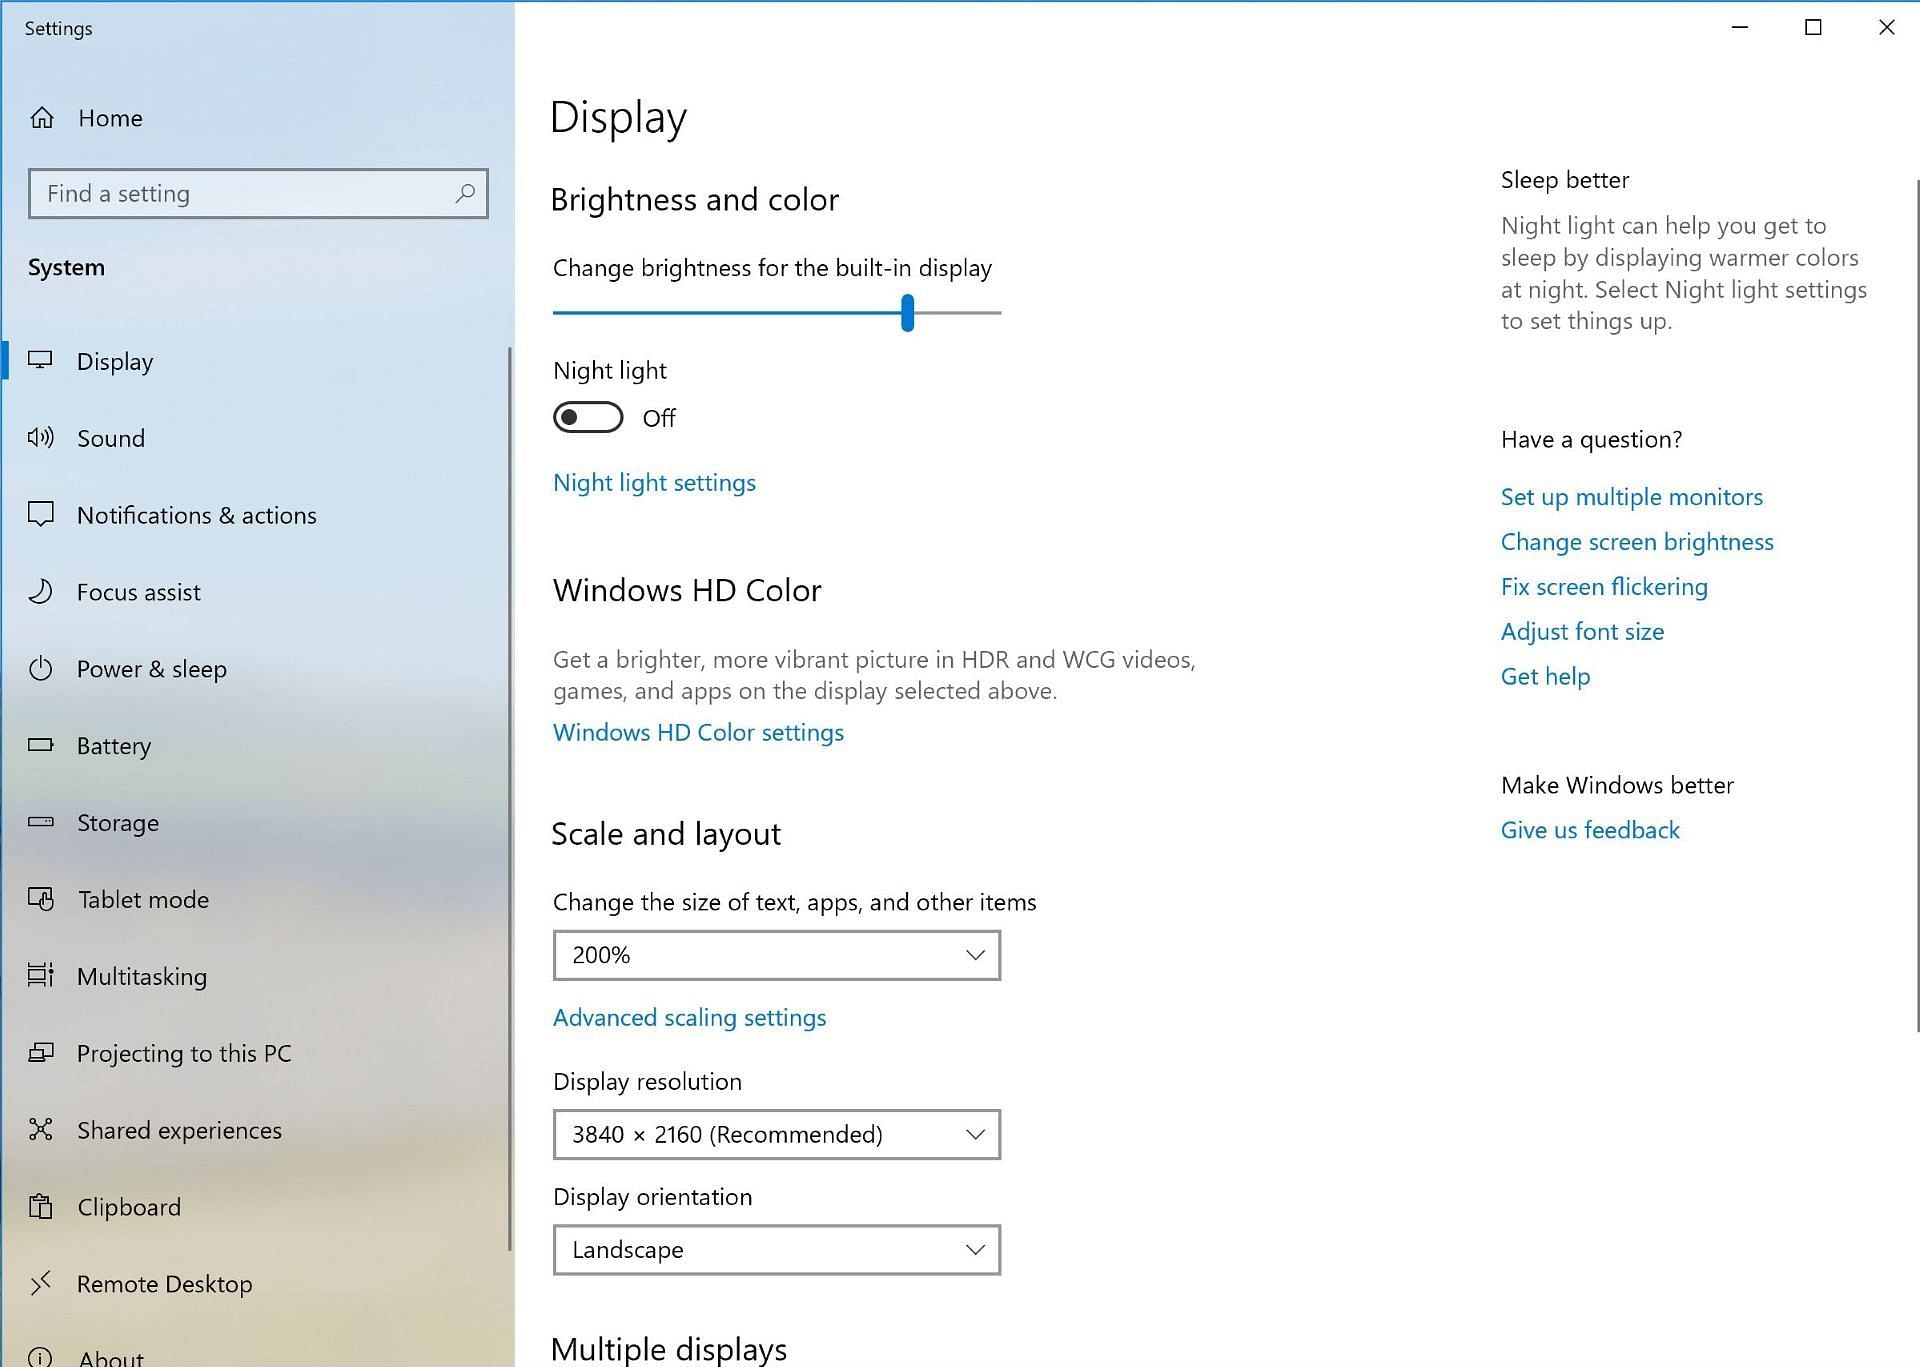 Lowering screen brightness (Image via Microsoft support)